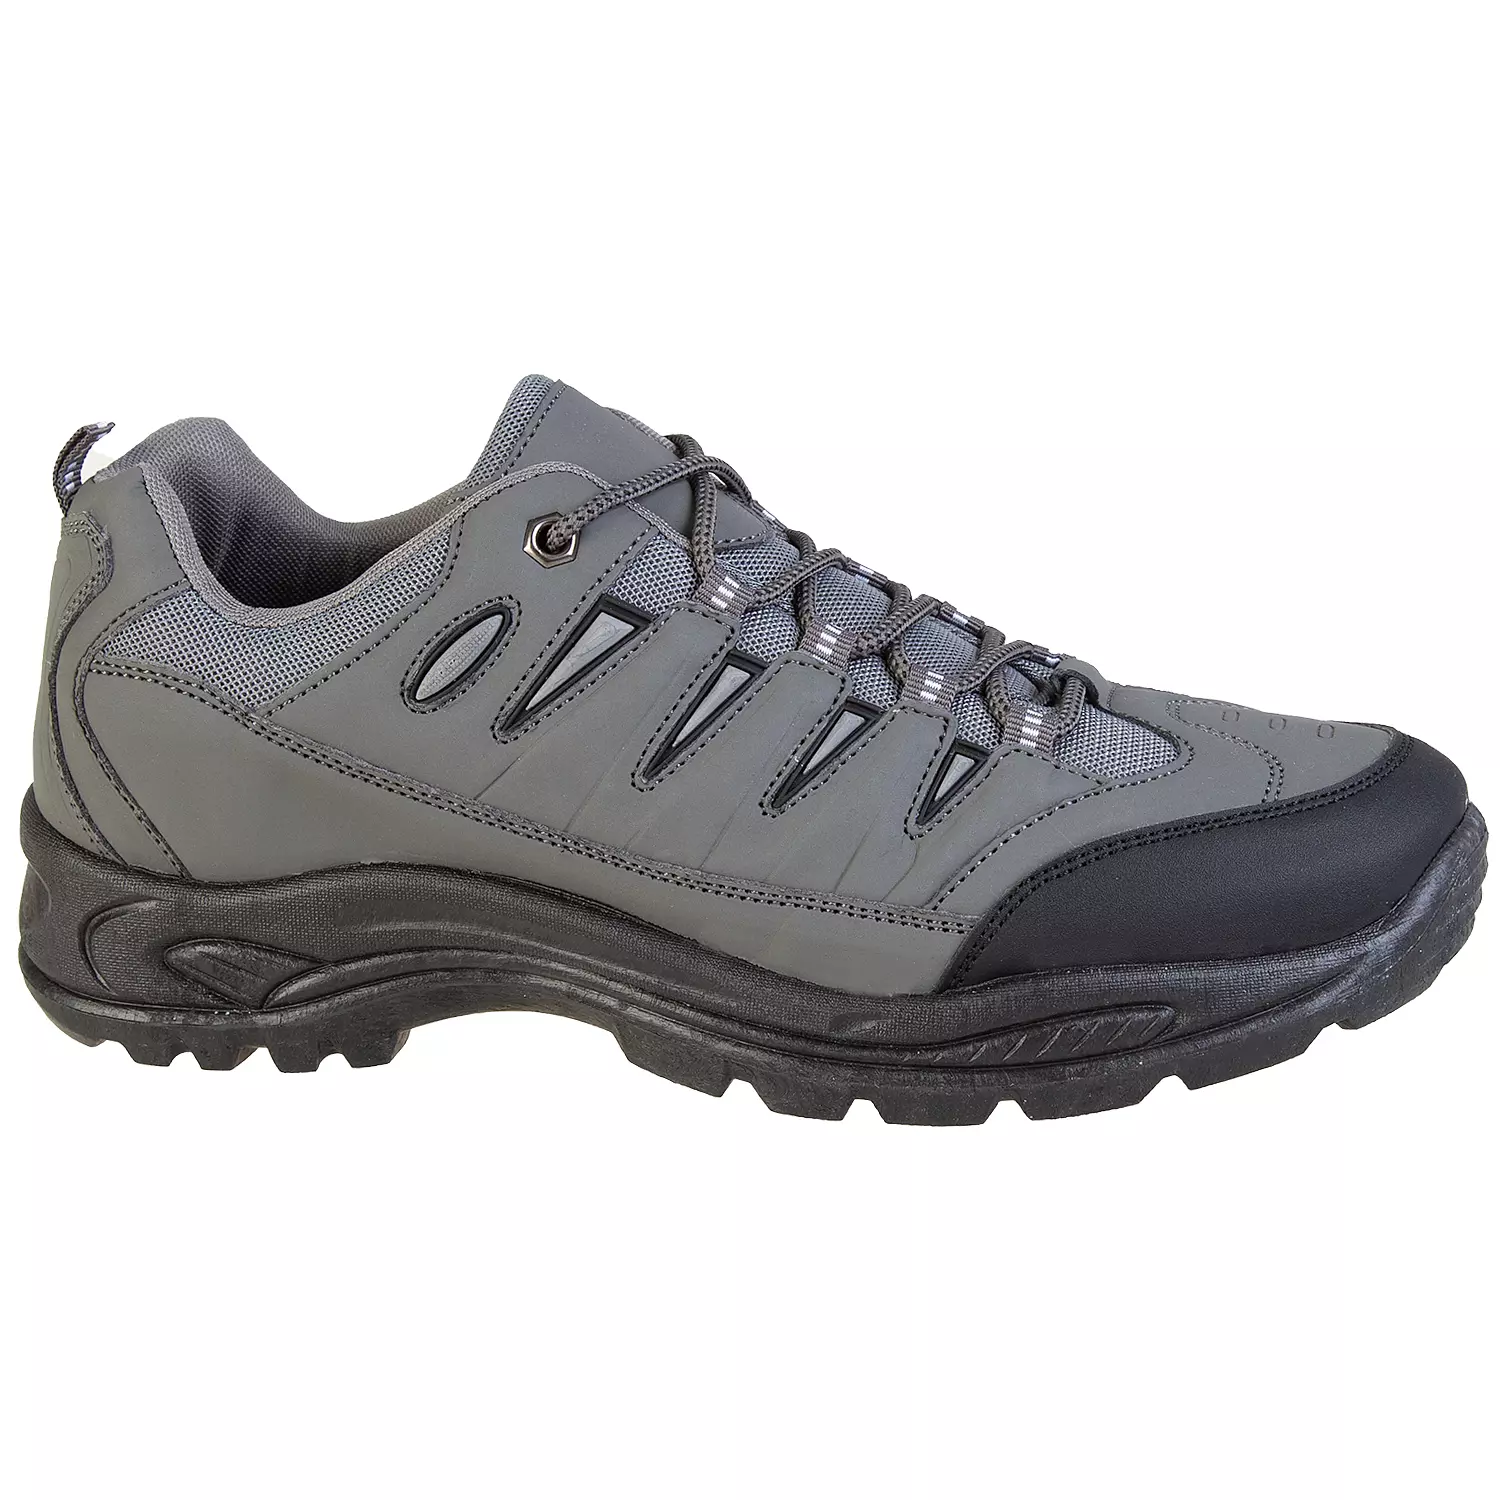 Men's low top waterproof trekking and hiking shoes, size 8